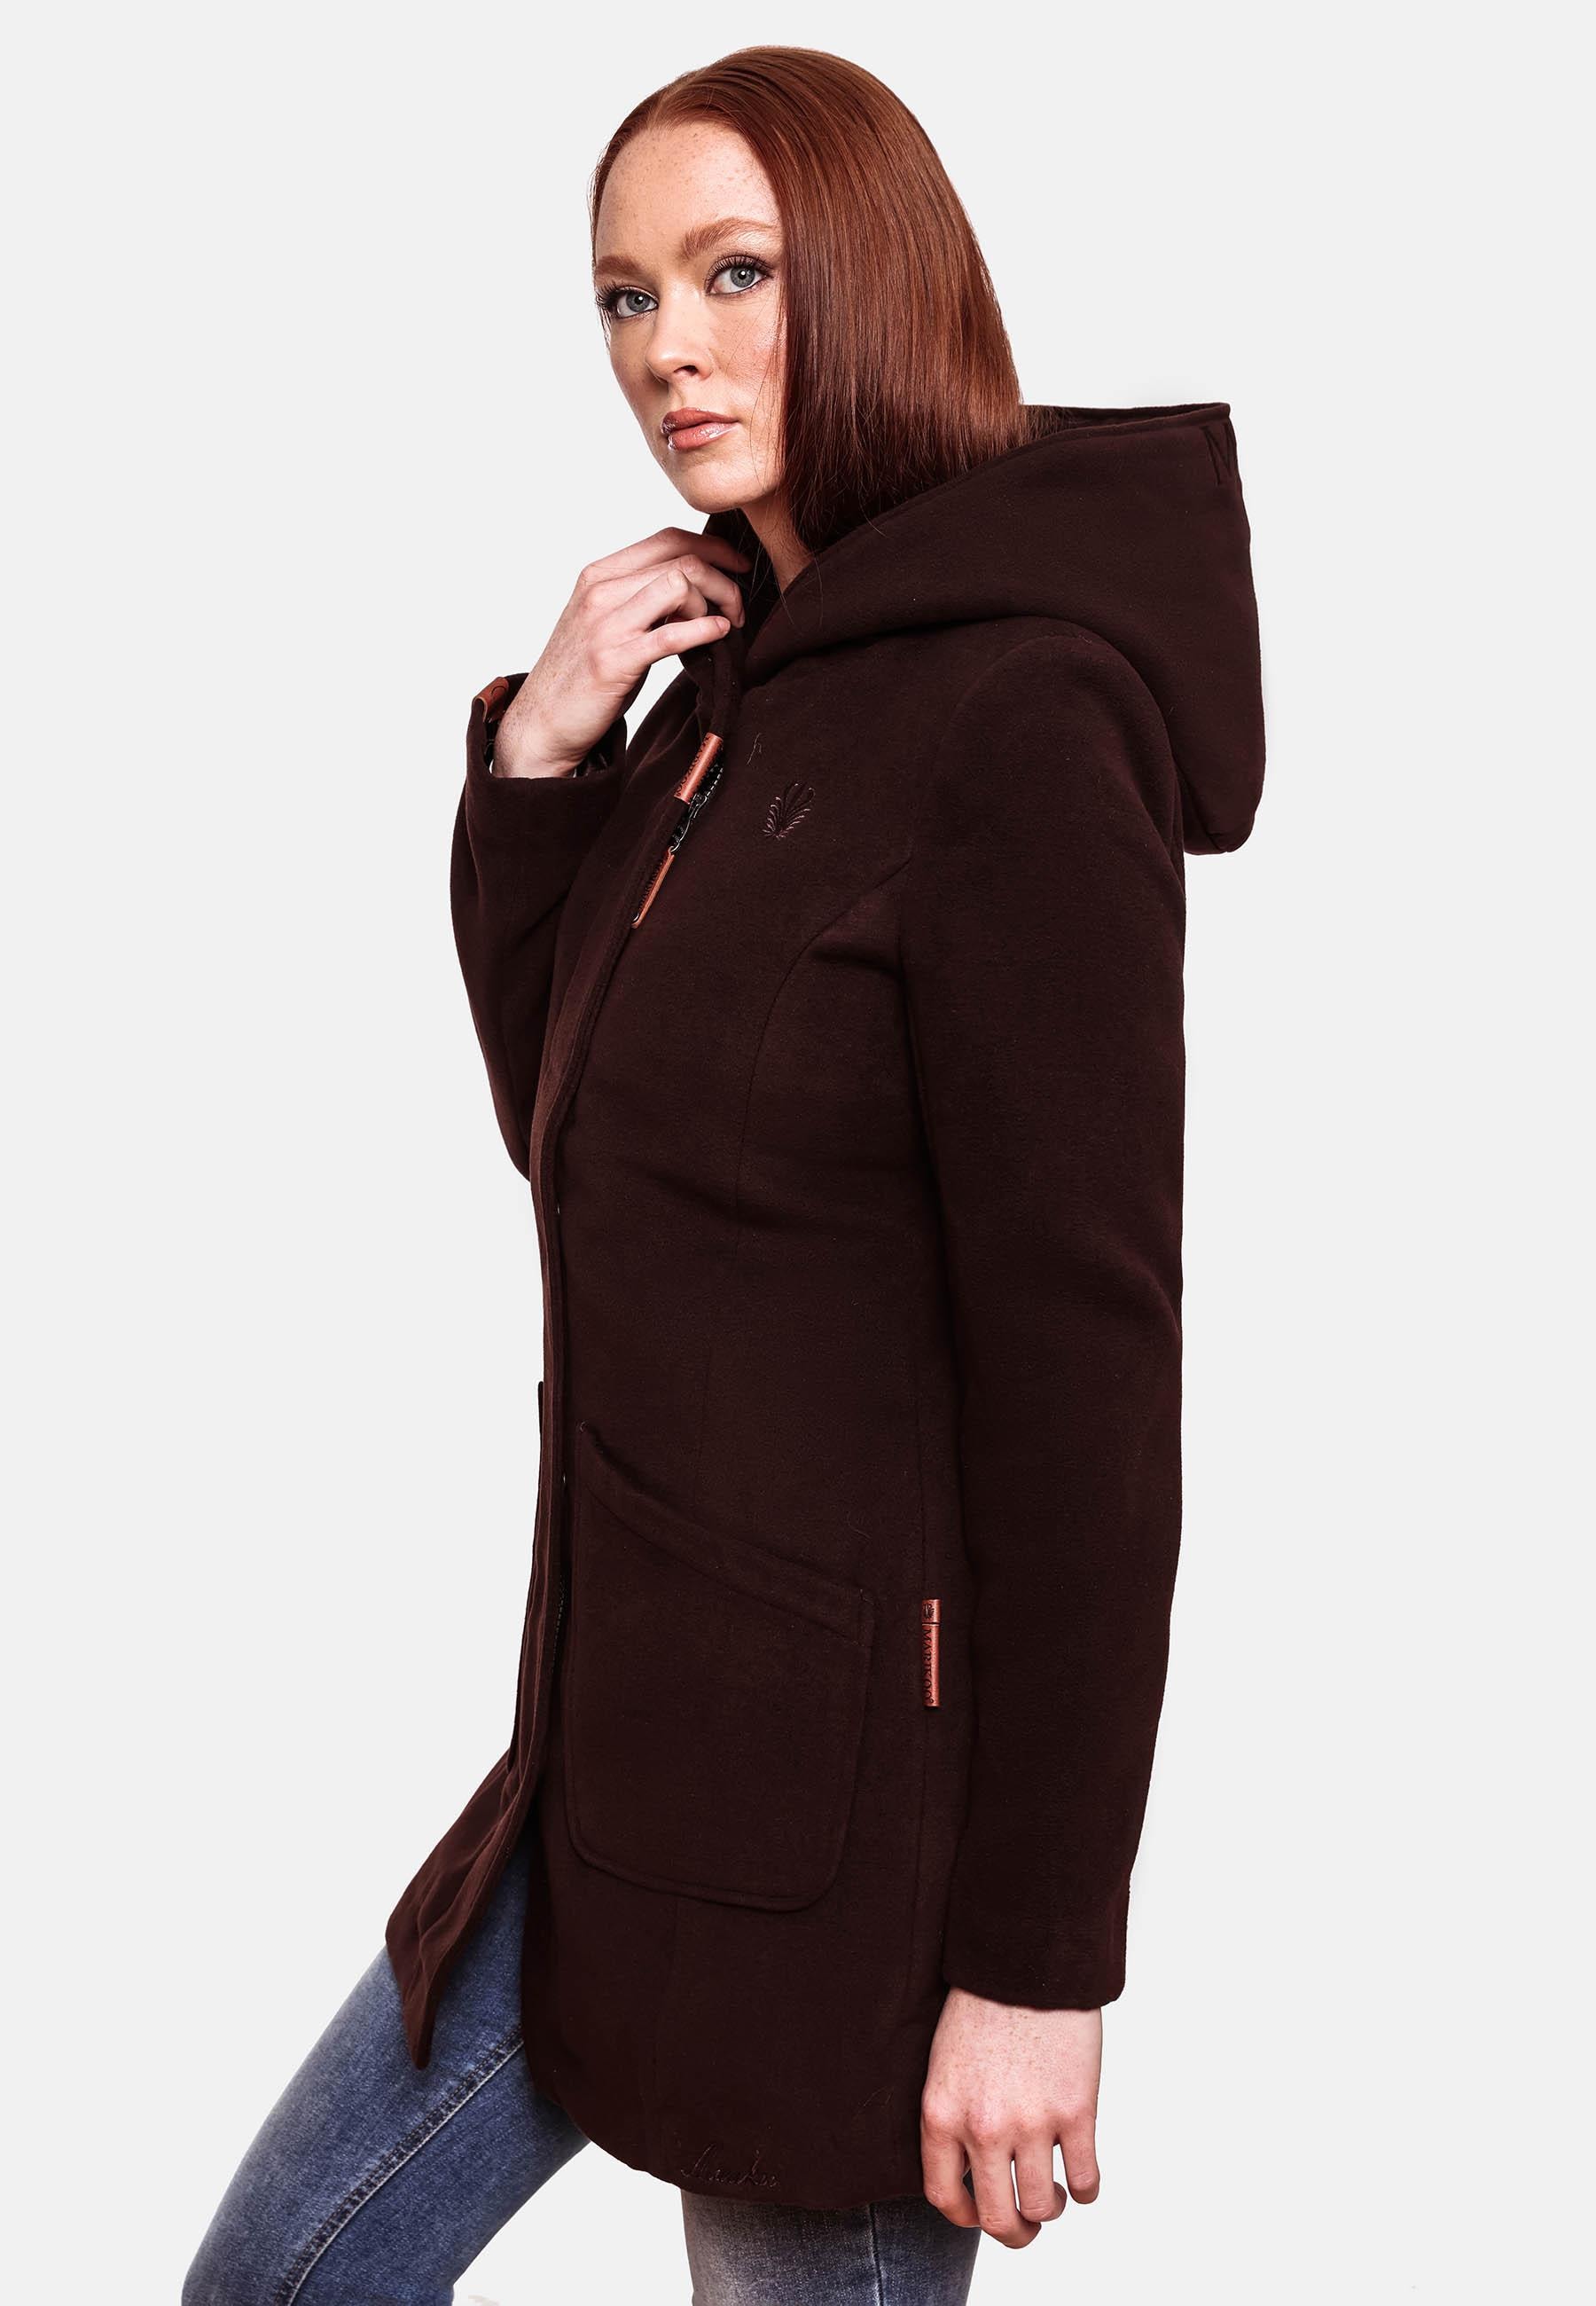 Marikoo Wintermantel »Maikoo«, hochwertiger Mantel mit großer Kapuze